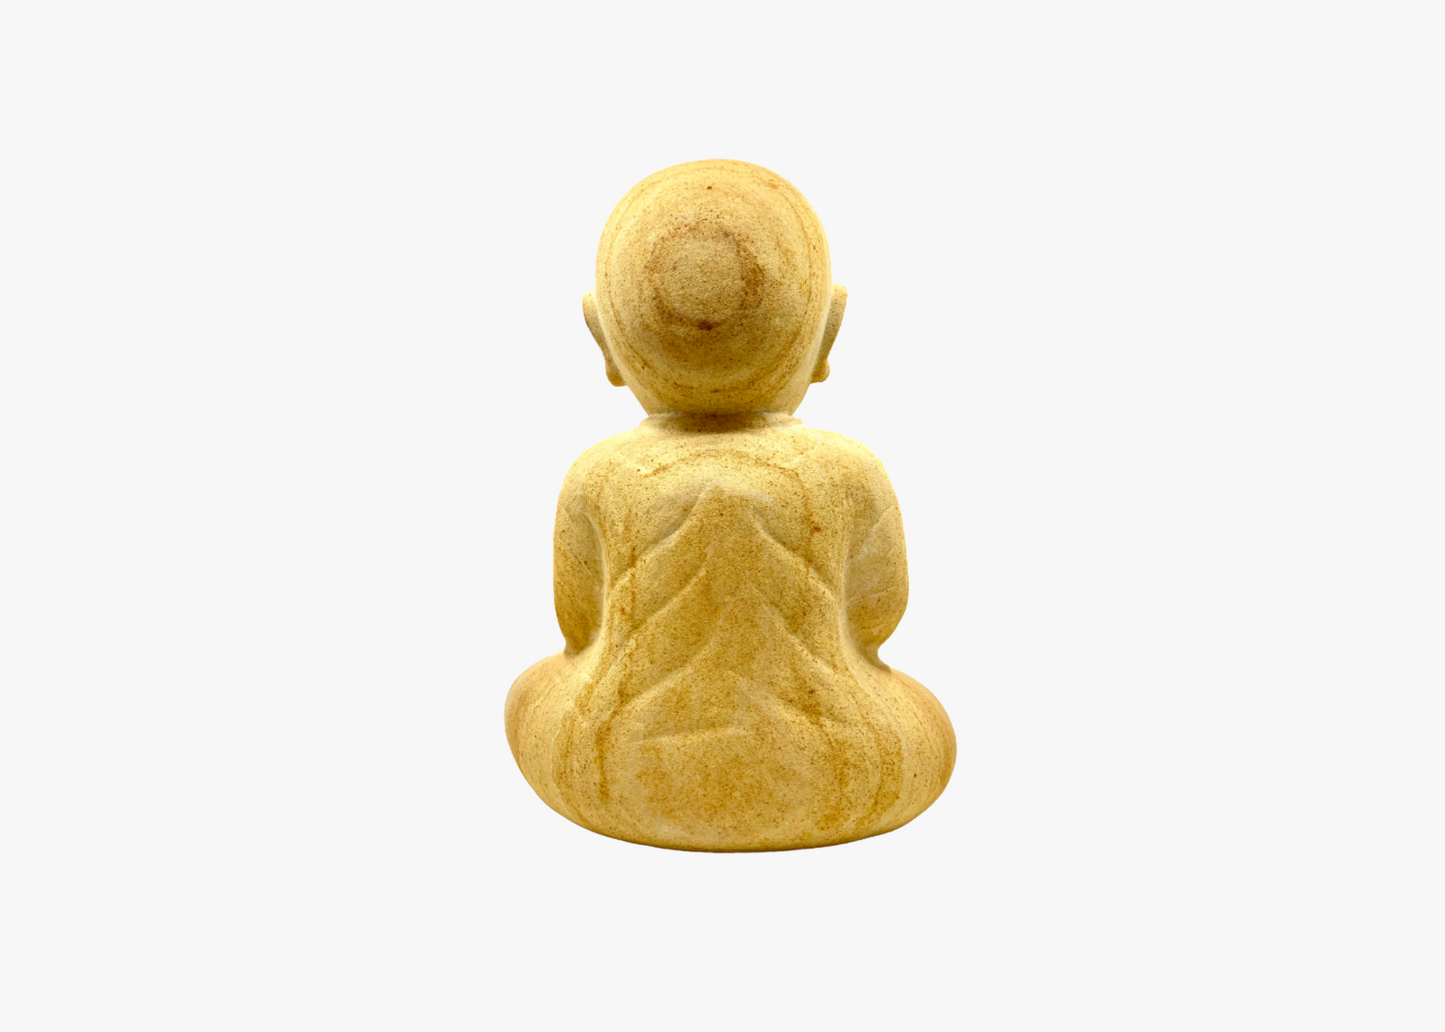 Baby Monk - Sandstone Statue (Medium, 31cm)